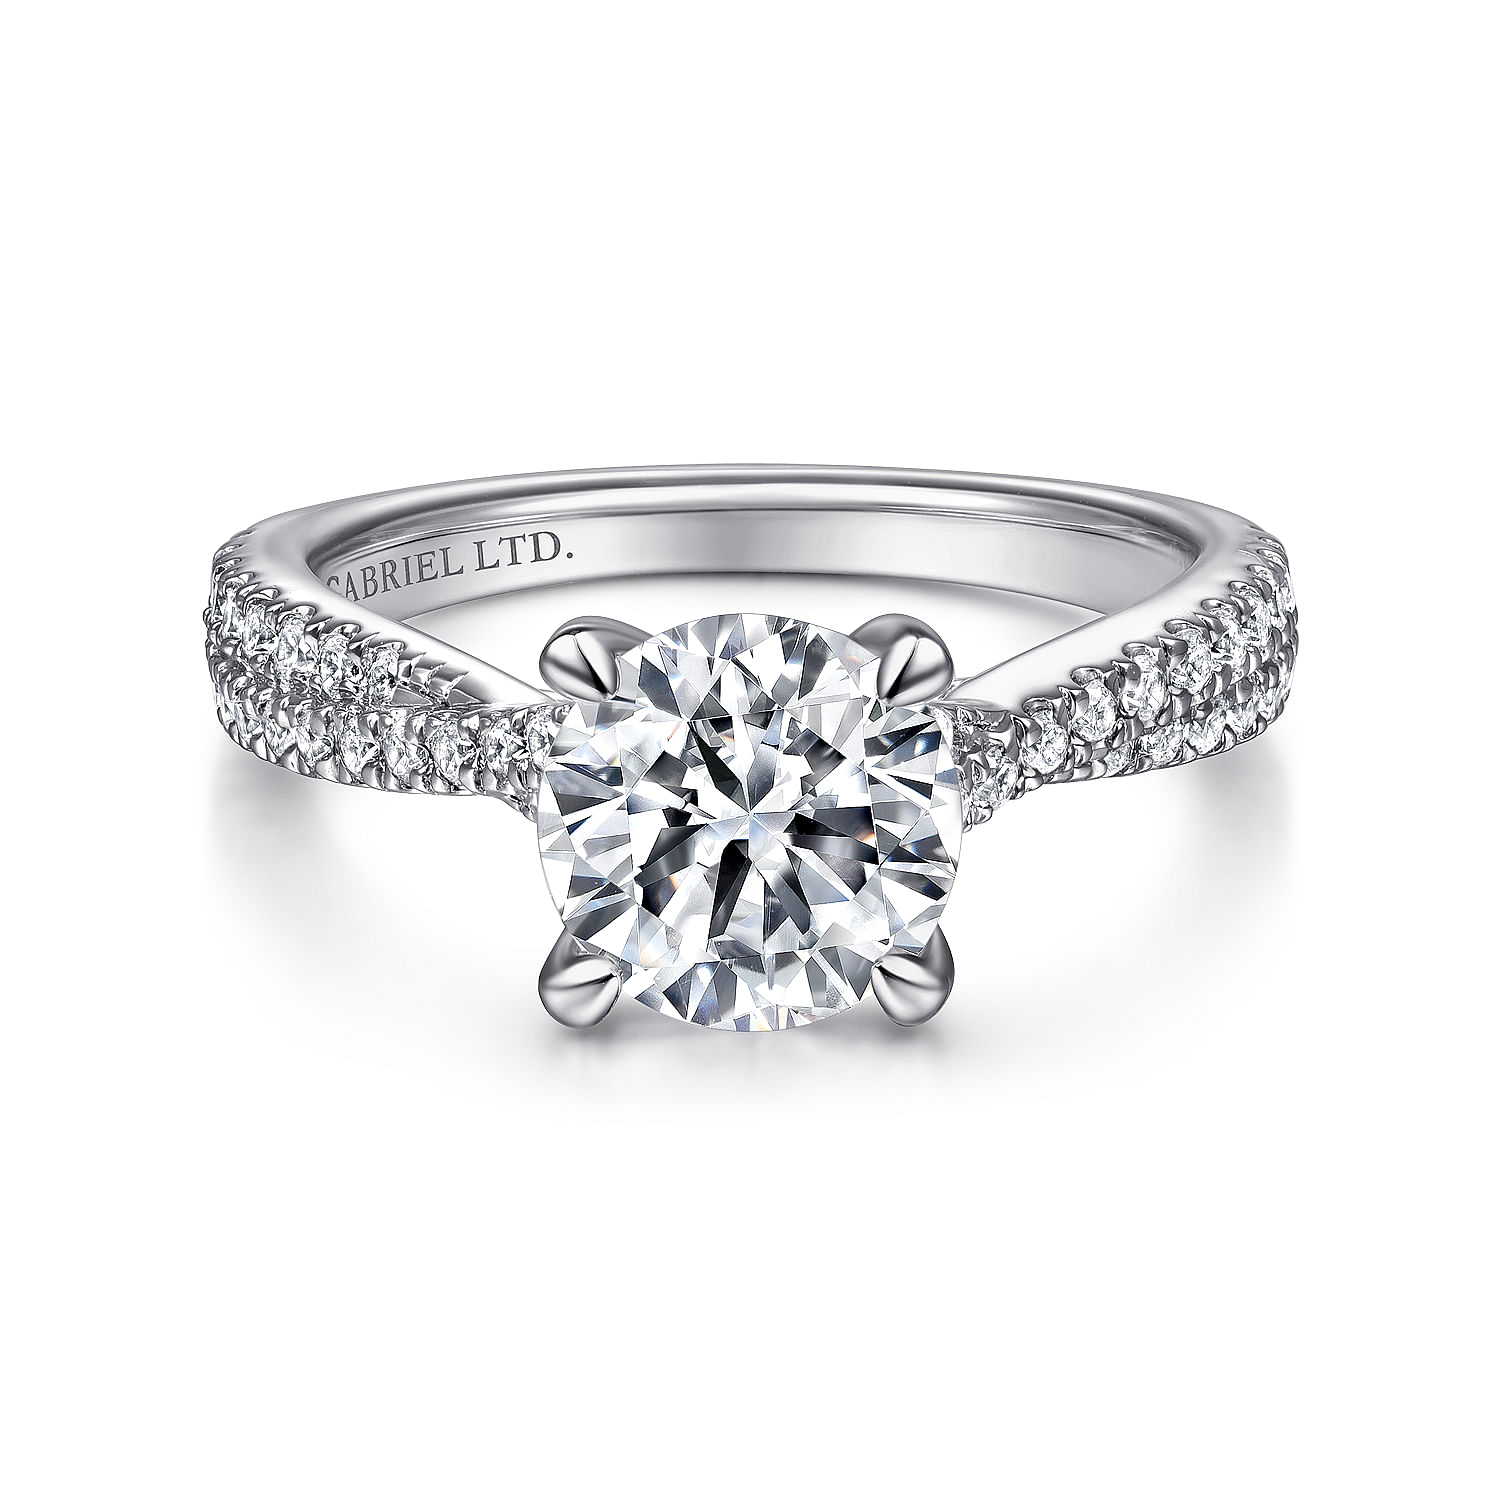 Gabriel - 18K White Gold Twisted Round Diamond Engagement Ring